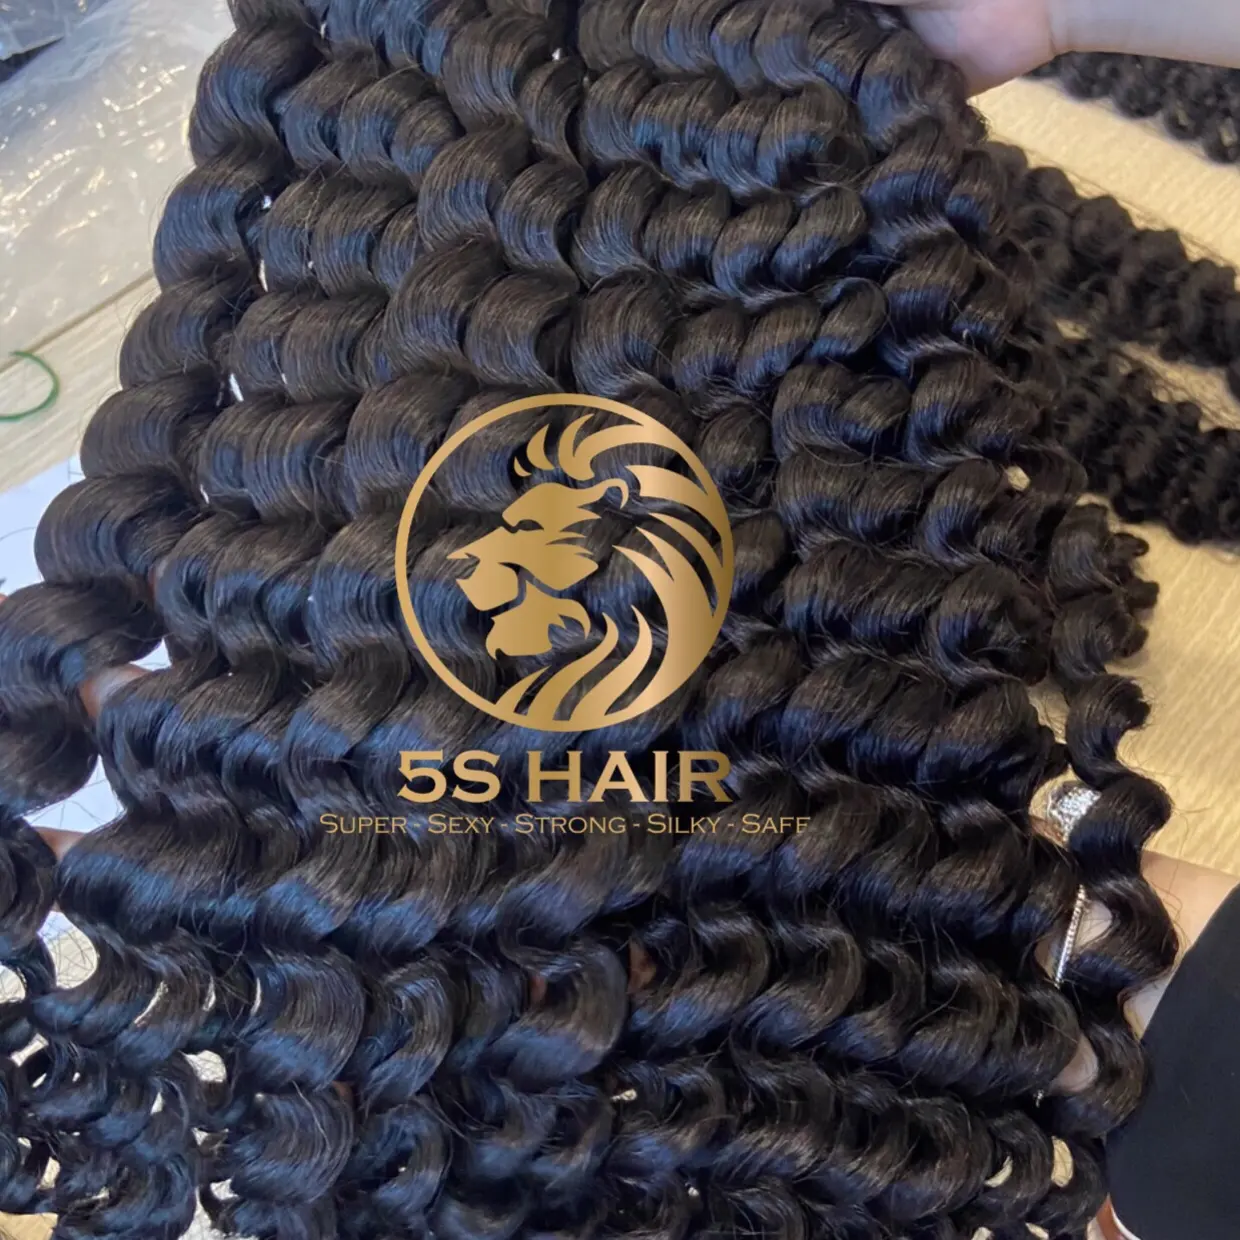 Highest quality luxury super full vietnamese curly wavy human hair virgin hair vendor, brazilian human hair wig, raw hair